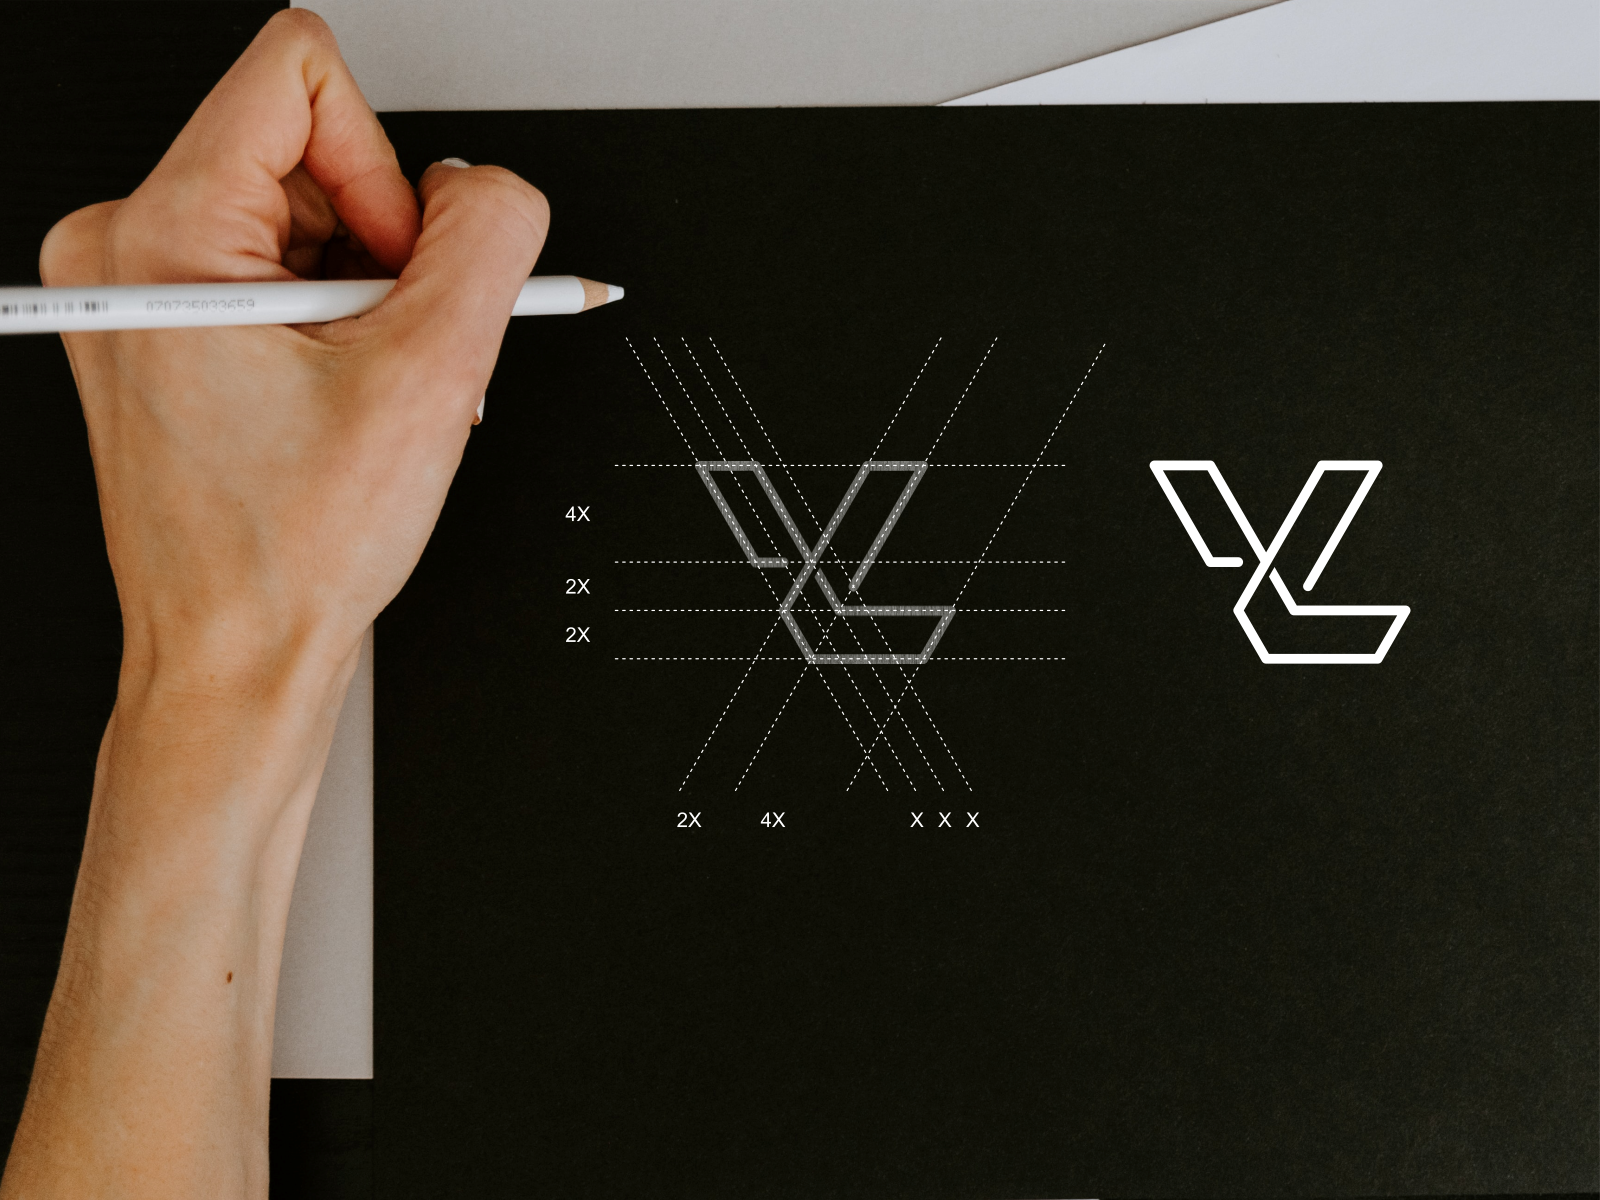 YL letter Logo Design vector Template. Abstract - Stock Illustration  [91033074] - PIXTA